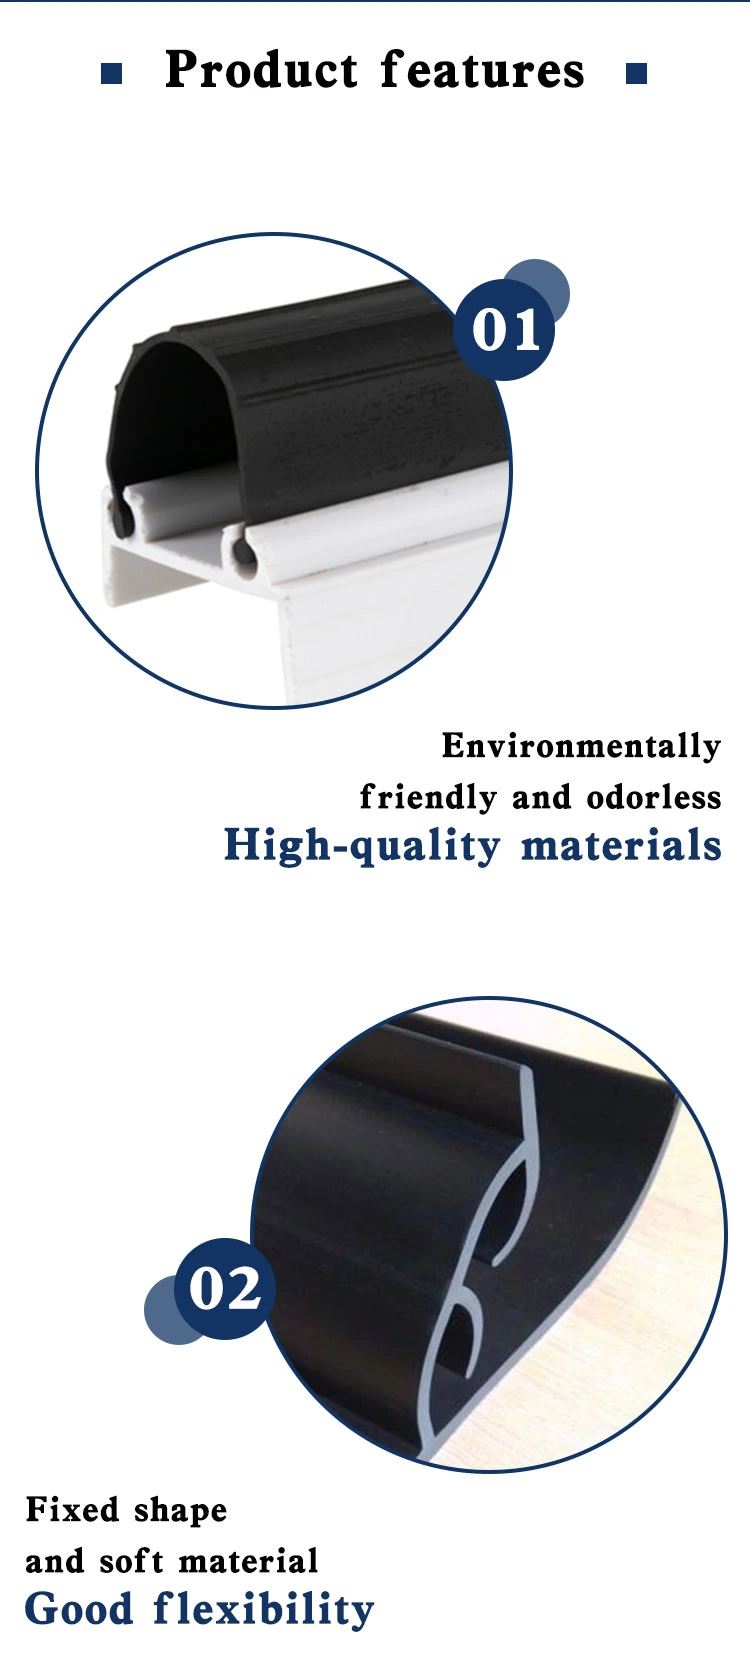 Black EPDM Rubber Garage Door Flood Barrier PVC Tpc Threshold Bottom Seal Strip 4&prime; &prime; T 1/4 Garage Door Seal Width 4 Inch